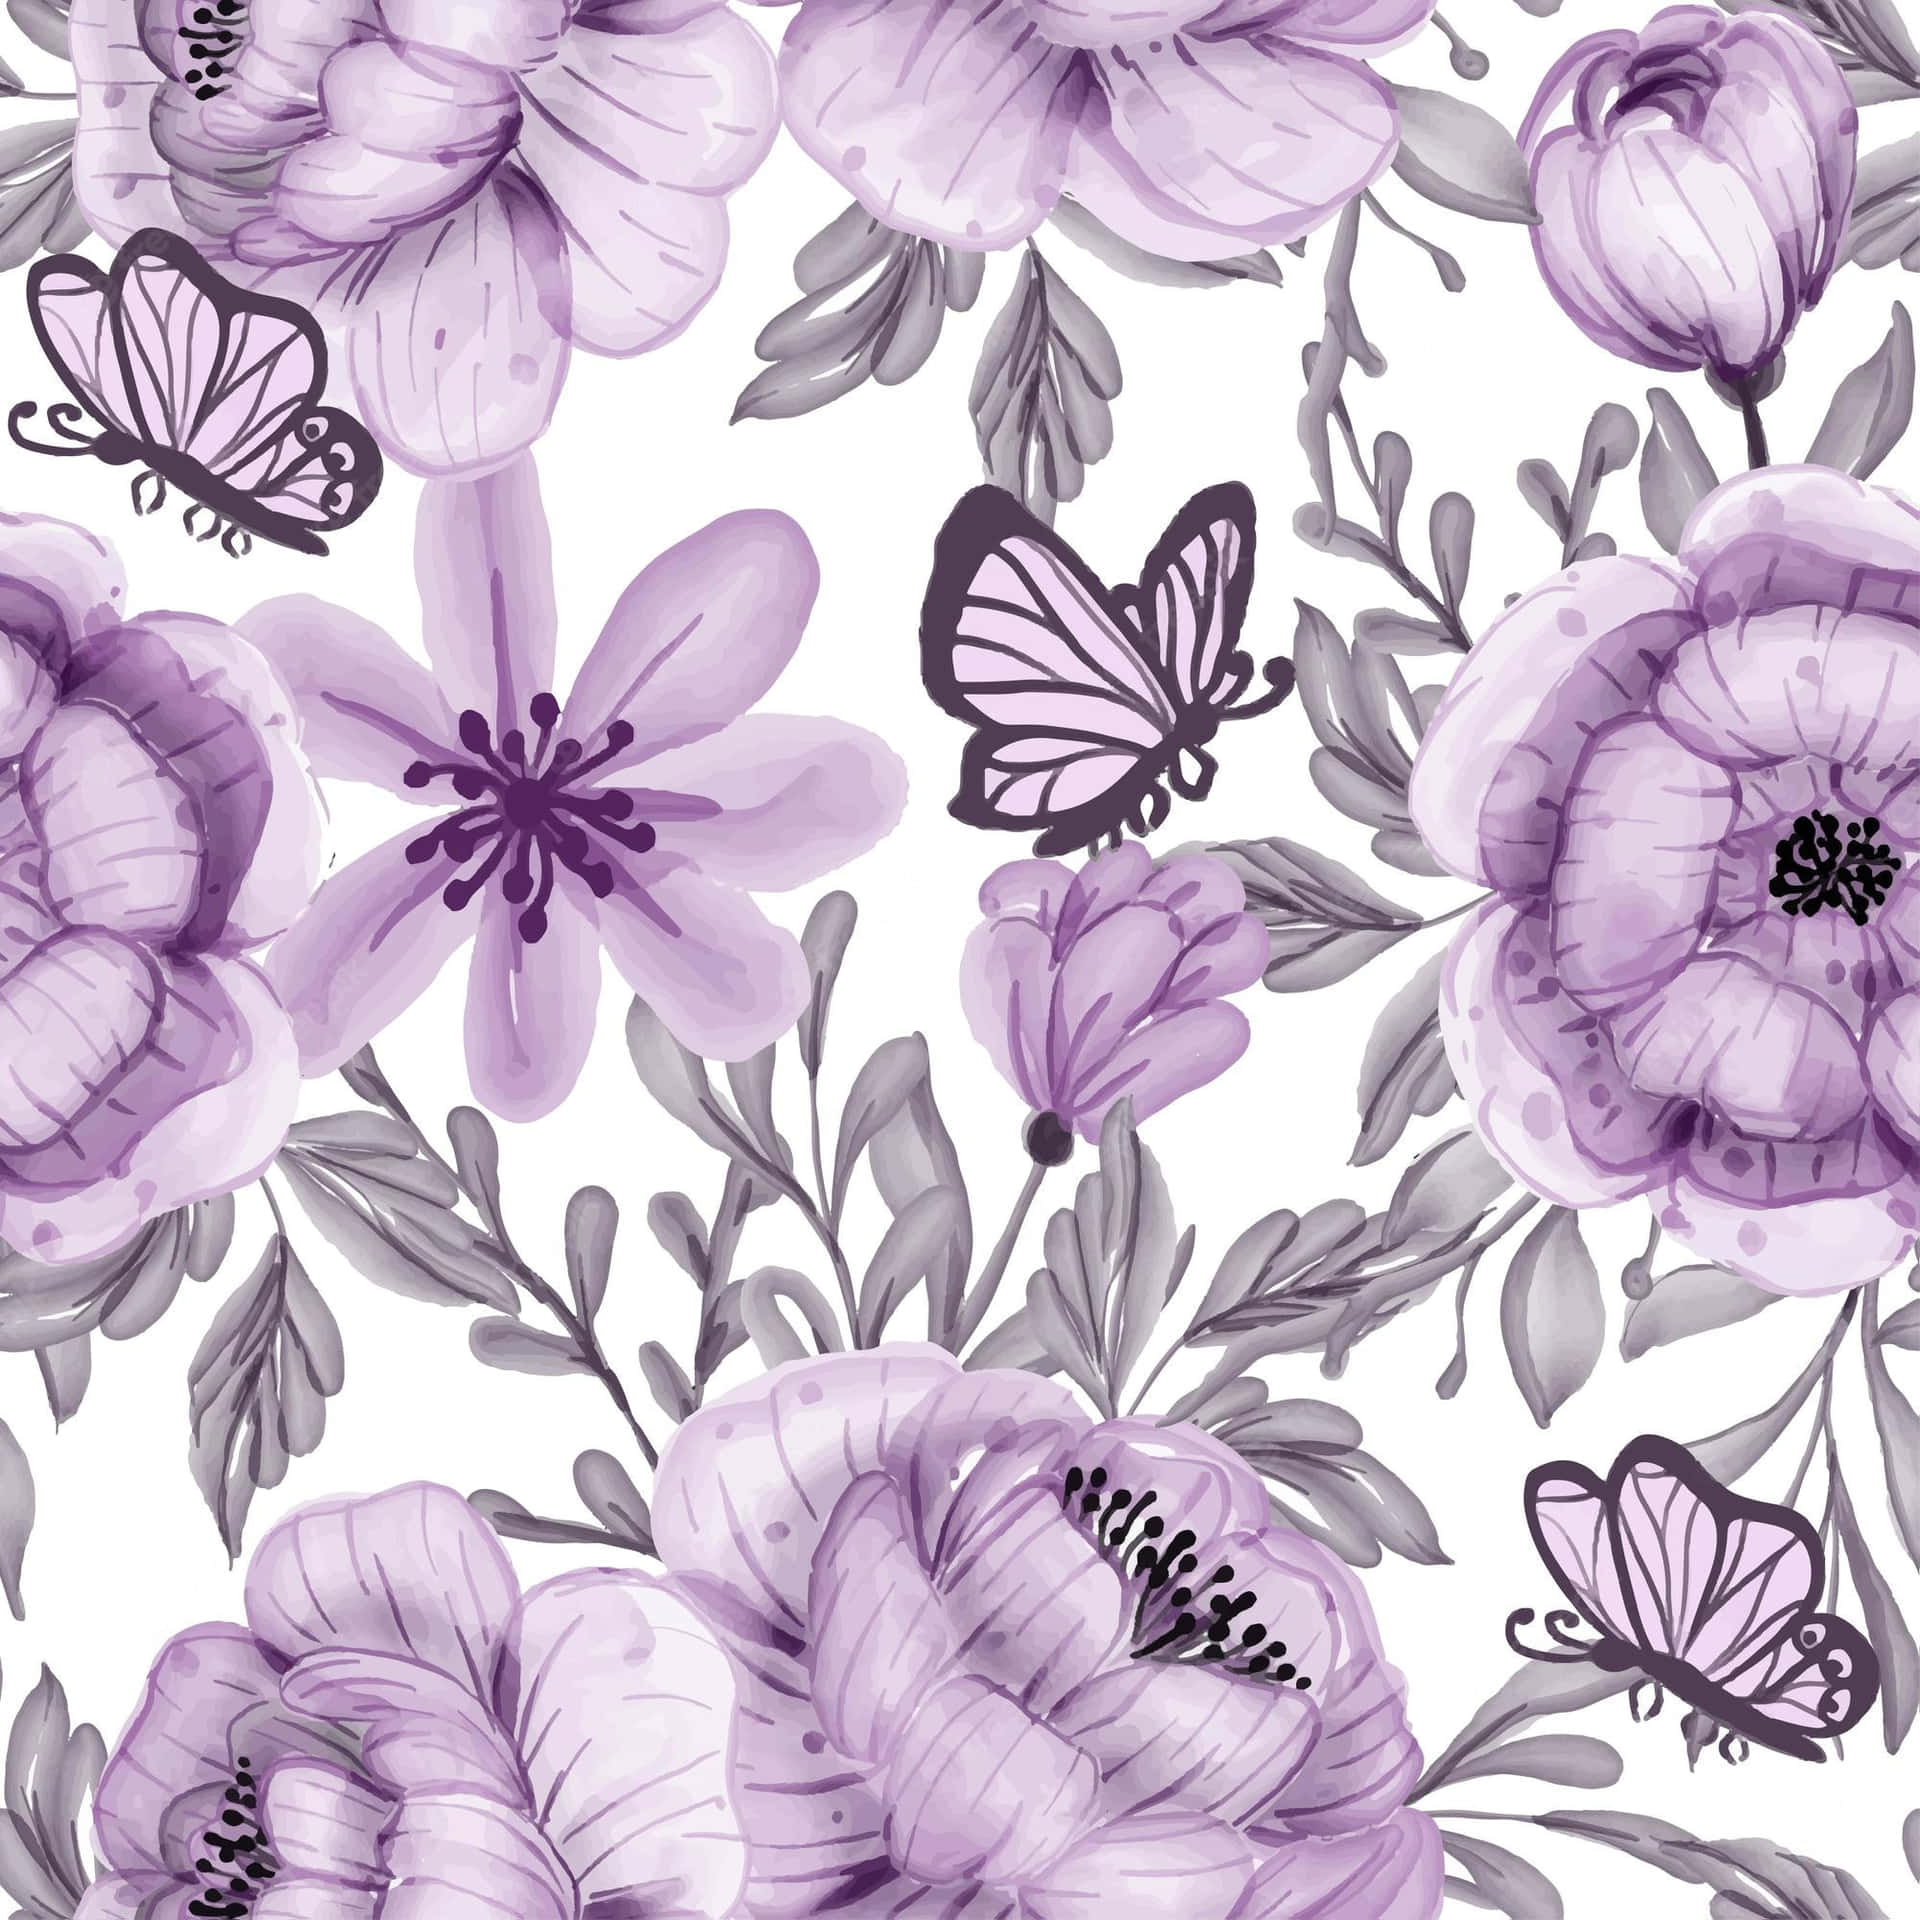 Tómateun Descanso Y Admira La Belleza De La Naturaleza: Una Vibrante Flor Púrpura.